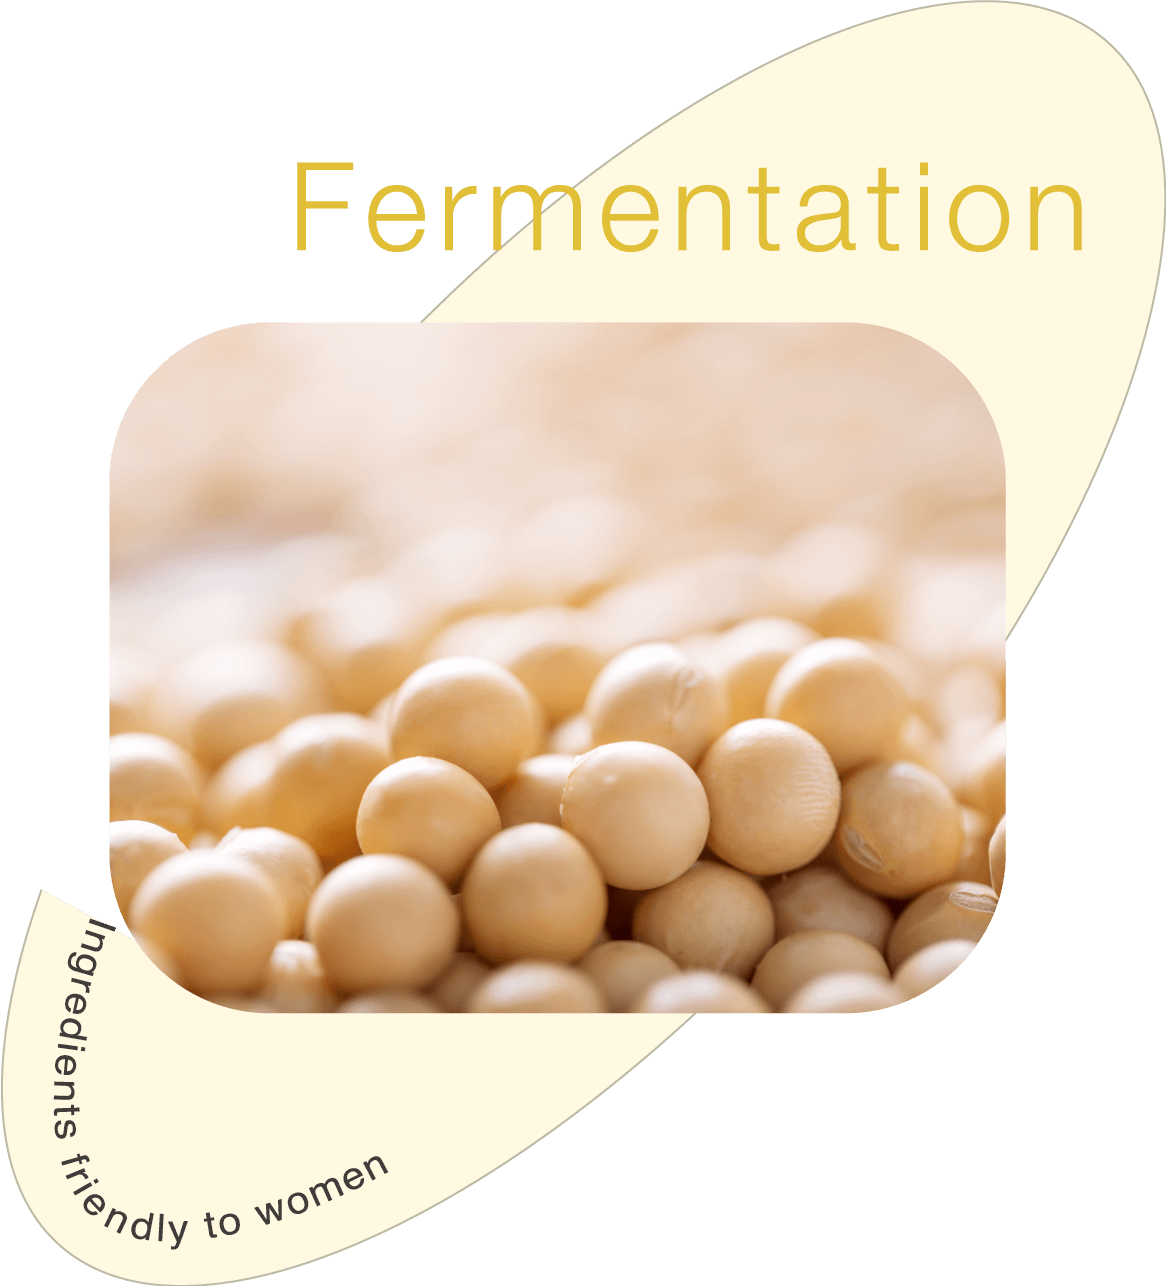 Fermentation Ingredients friendly to women